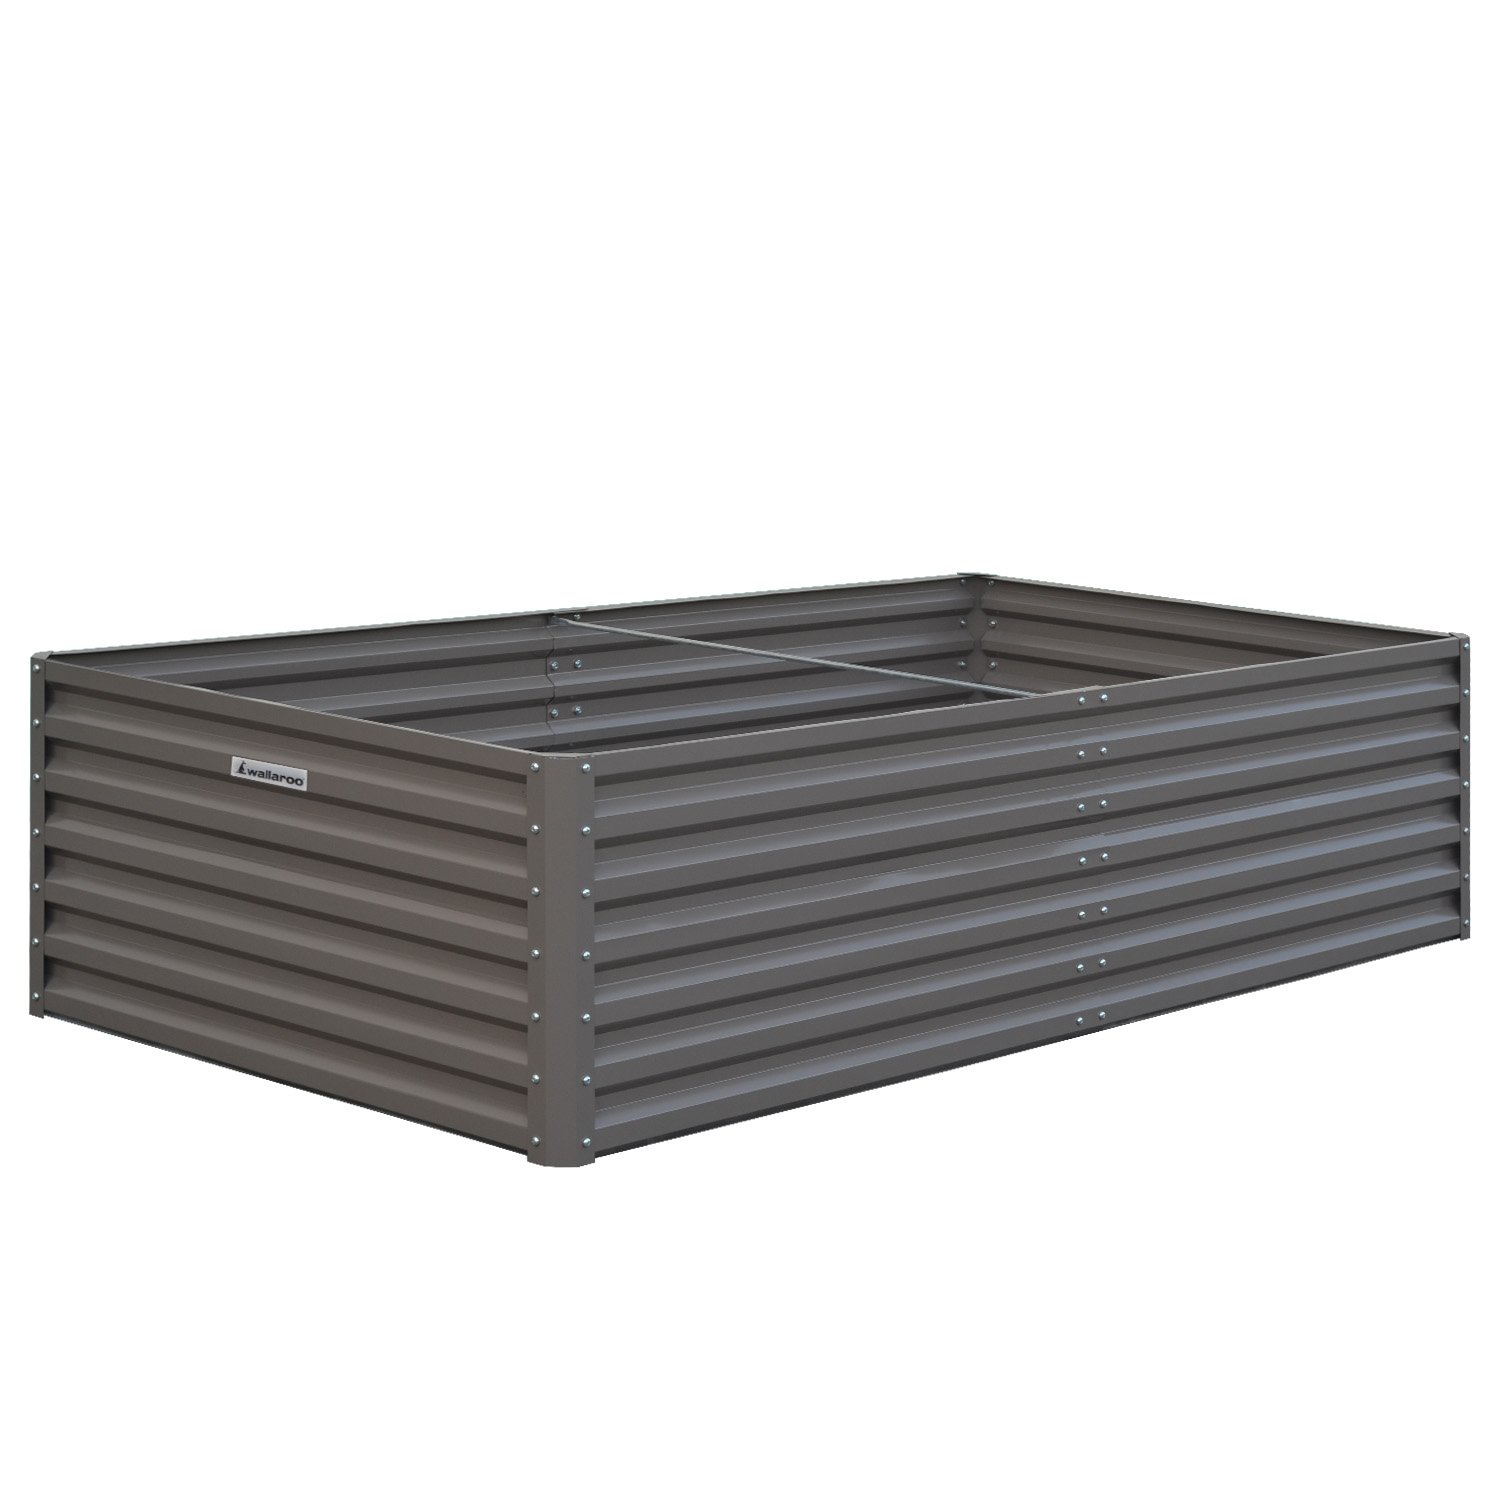 Wallaroo Garden Bed 240 x 120 x 57cm Galvanized Steel - Grey 1